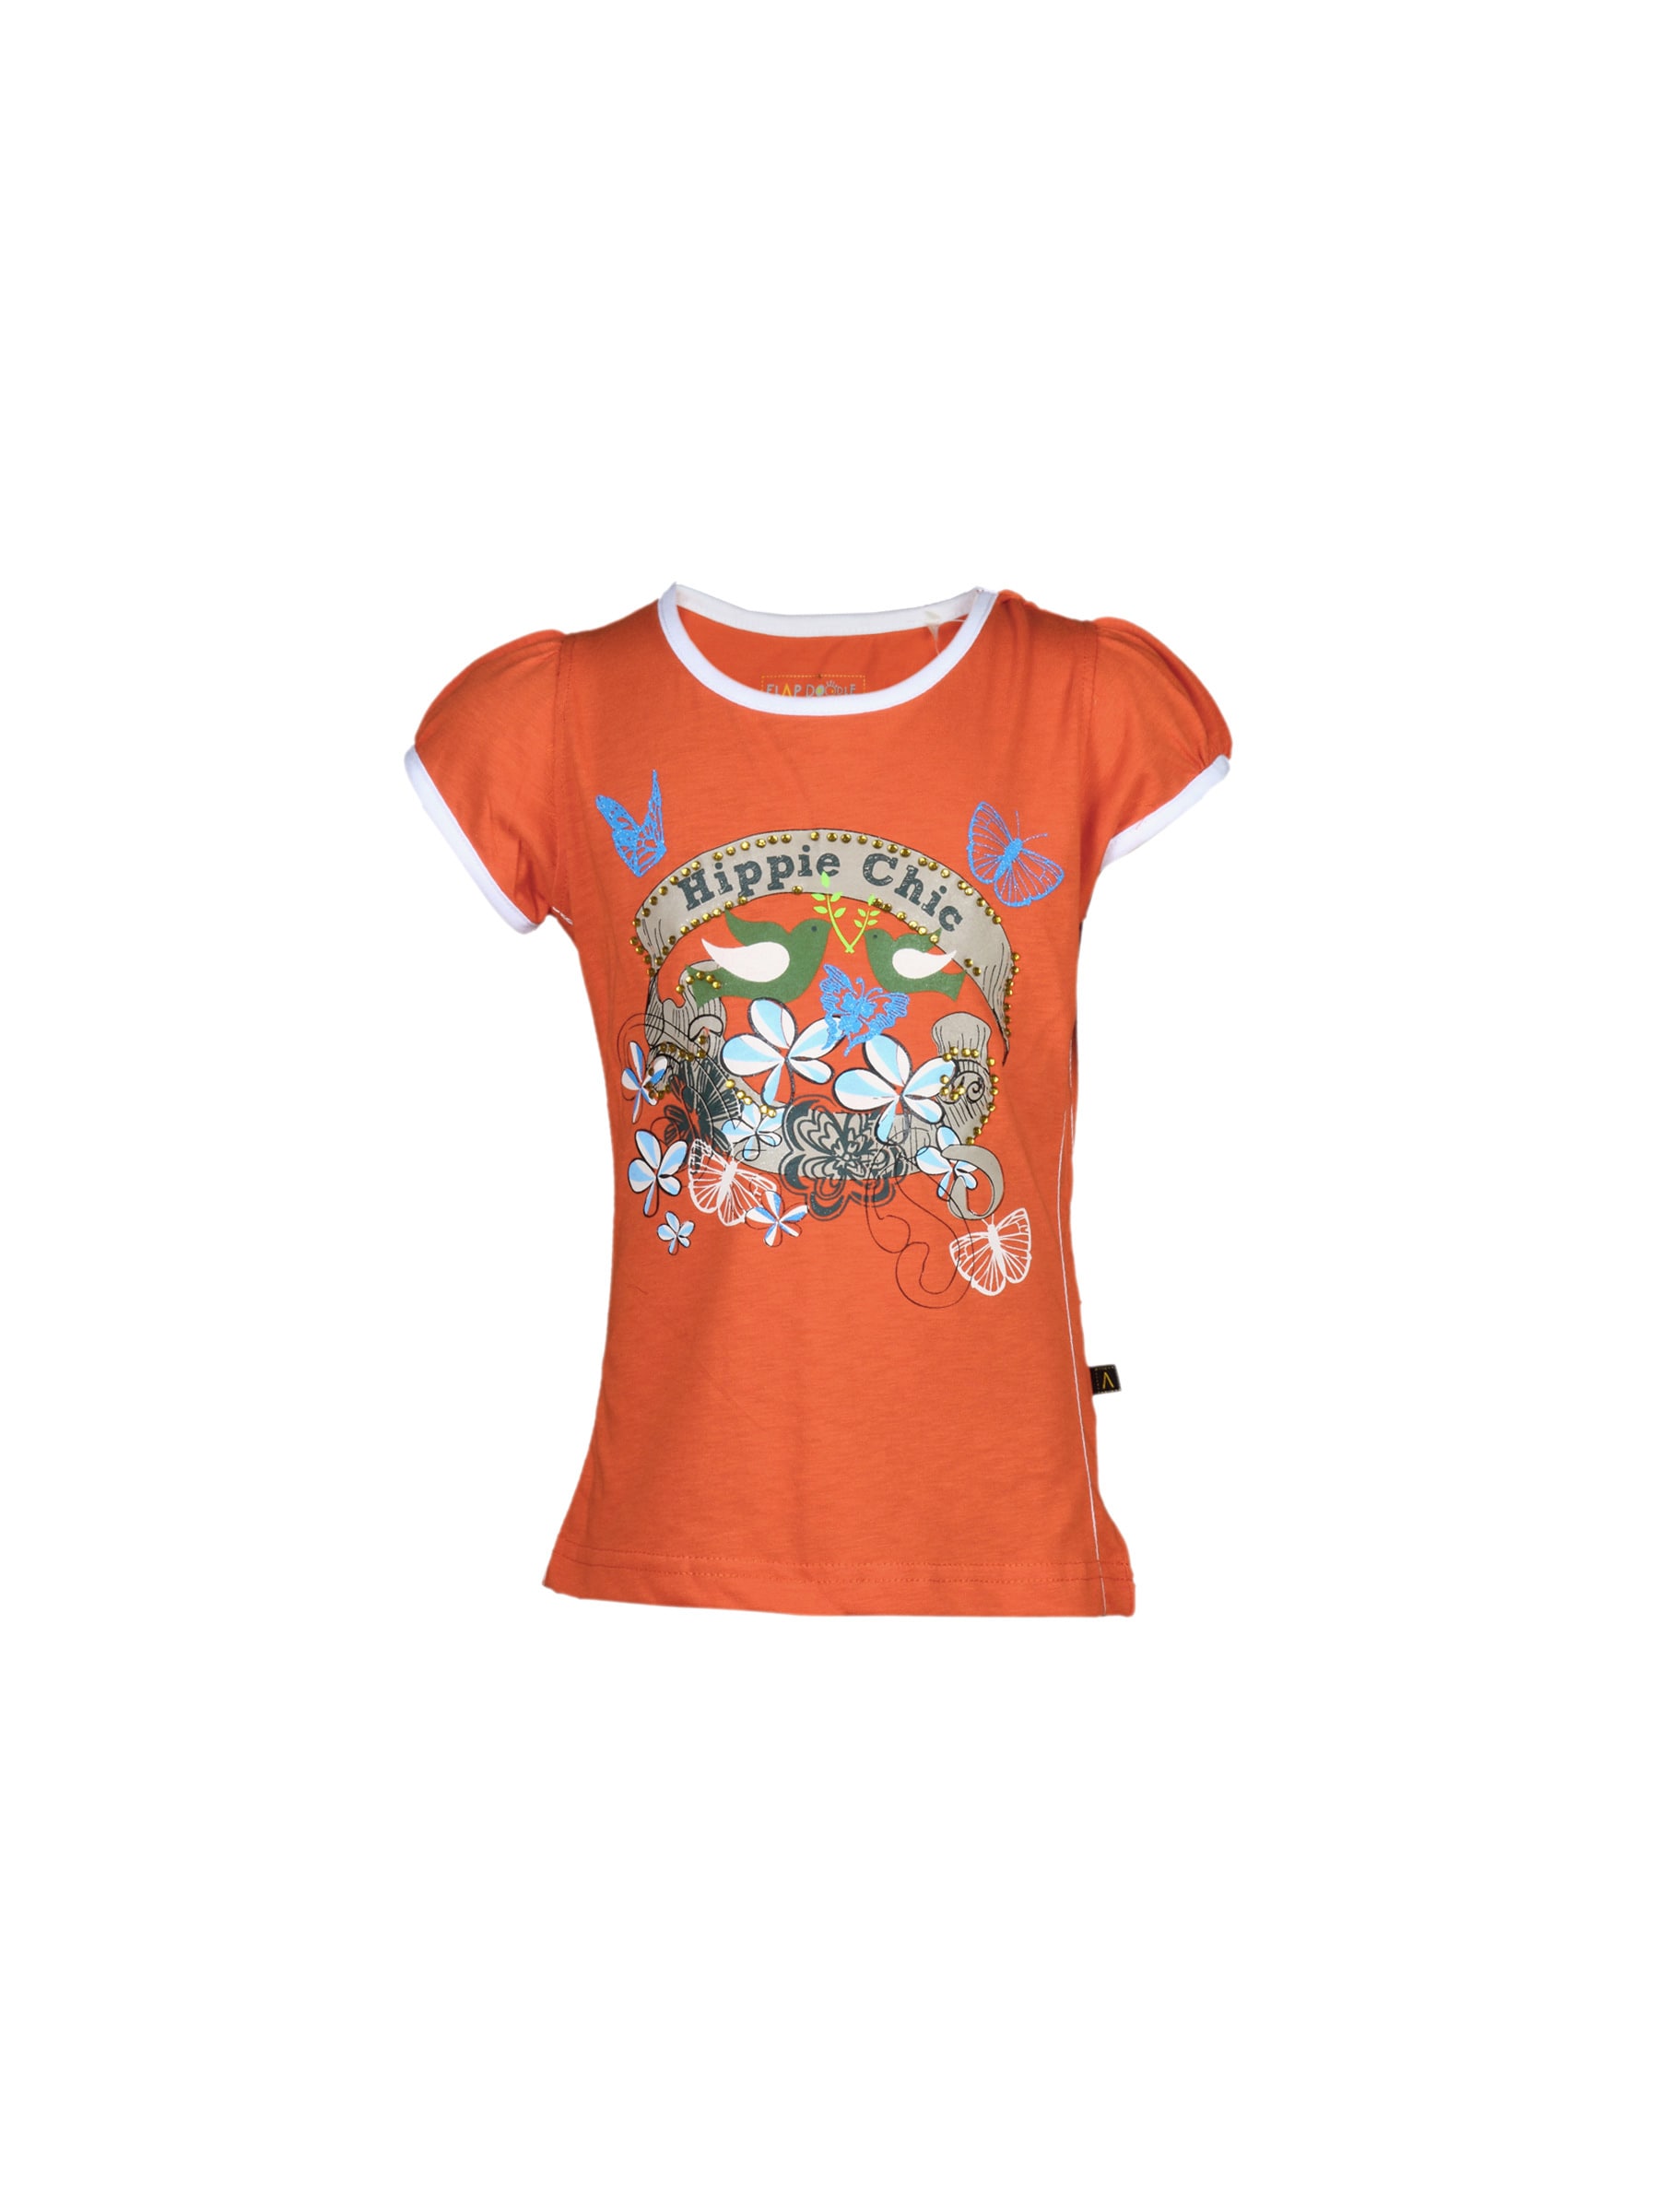 Doodle Girl's Hippie Chic Orange Kidswear